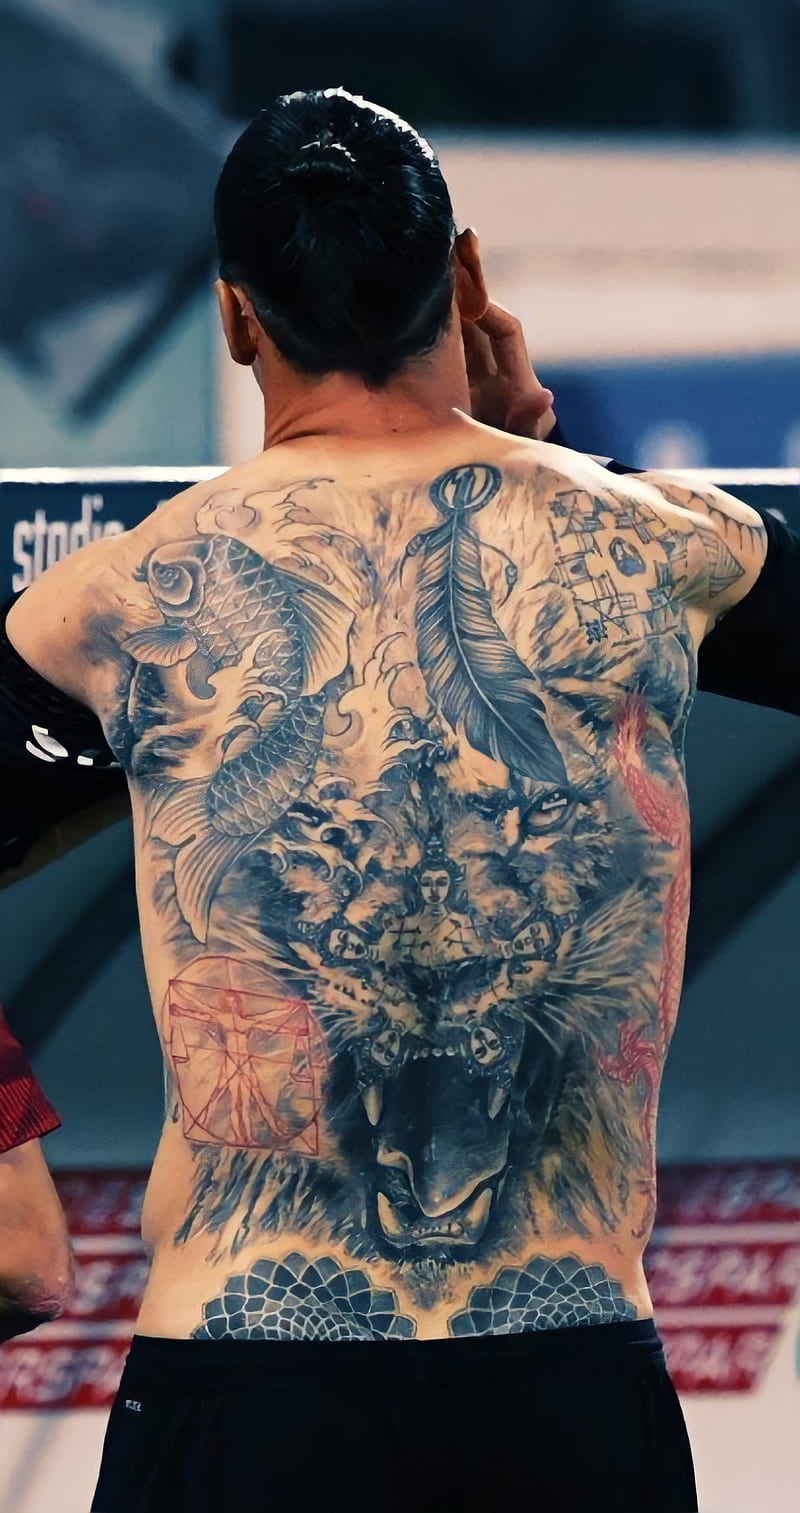 PSG striker Zlatan Ibrahimovic reveals new tattoos for charity | KickOff